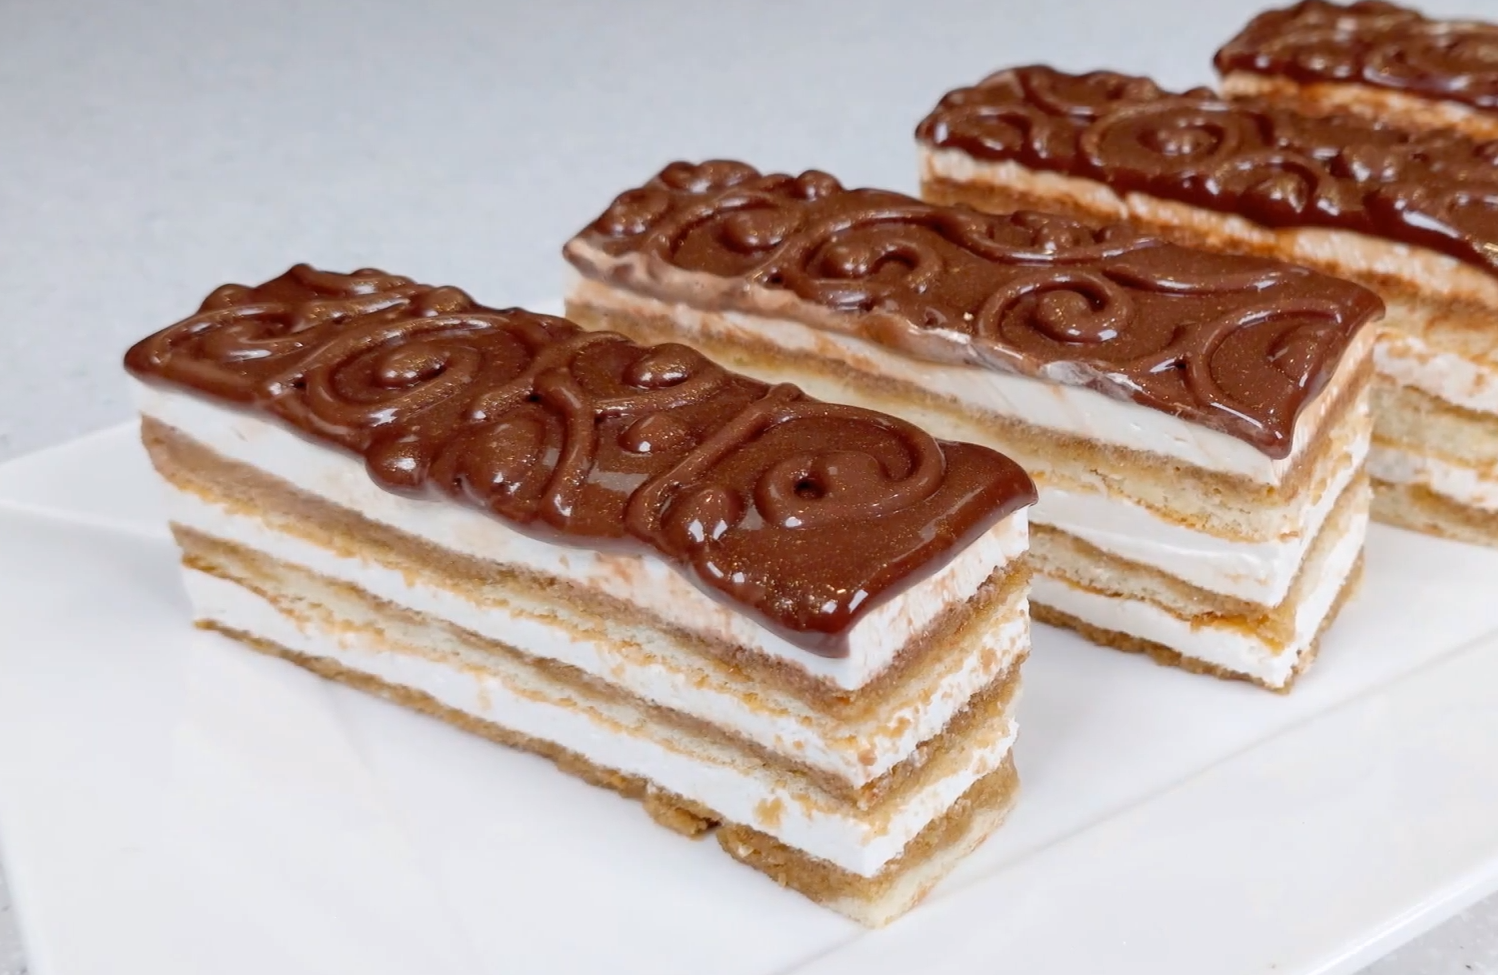 Торт Опера – рецепт французского десерта Видео Кулинария